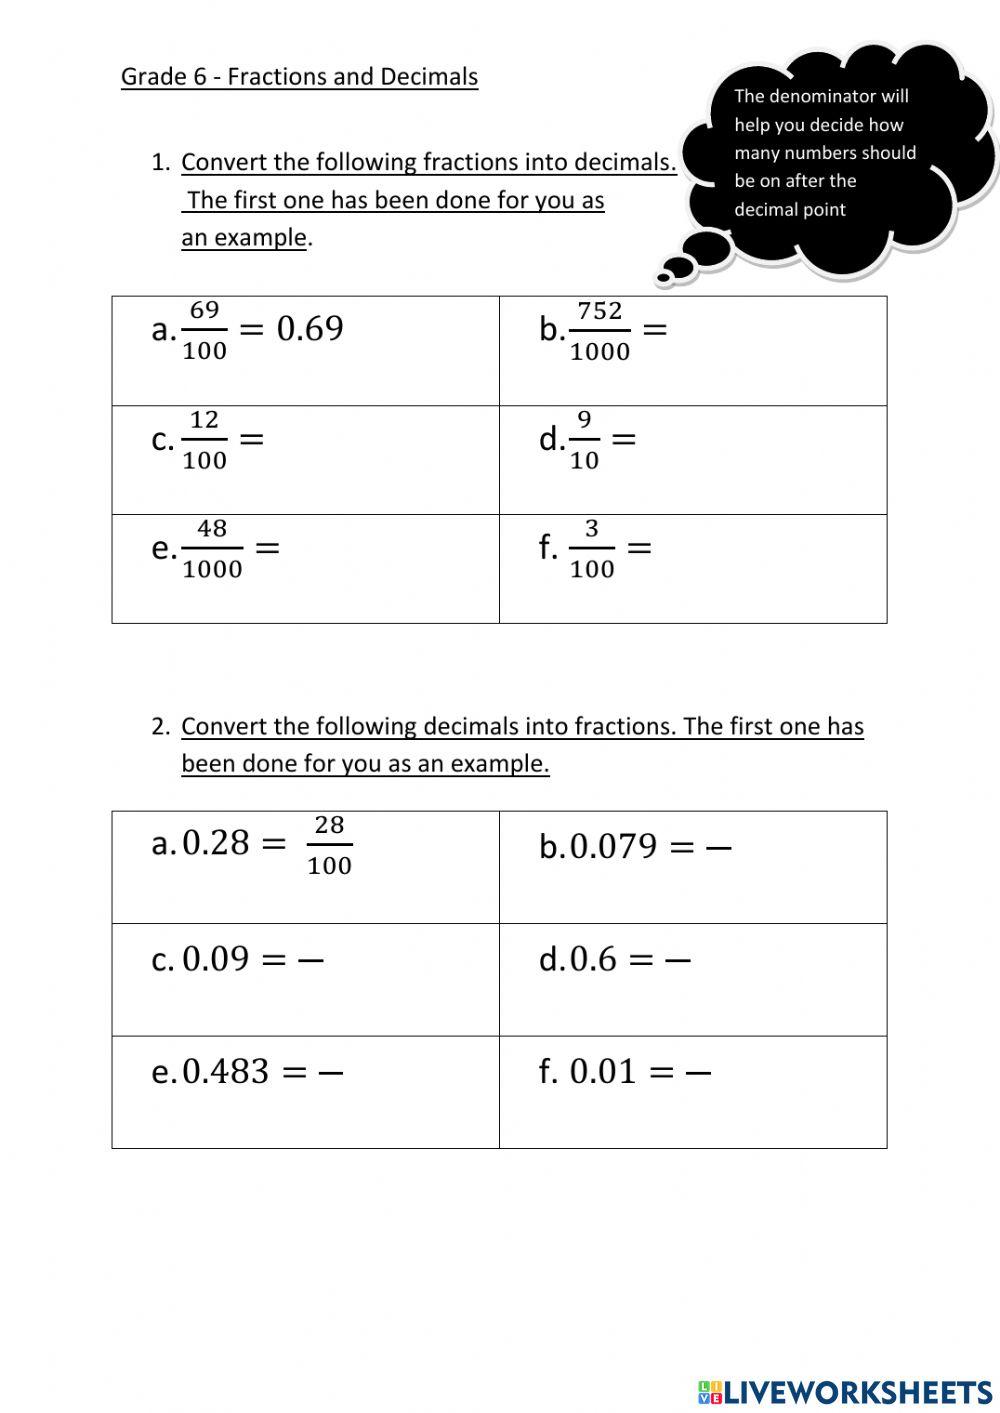 Converting between fractions and decimals